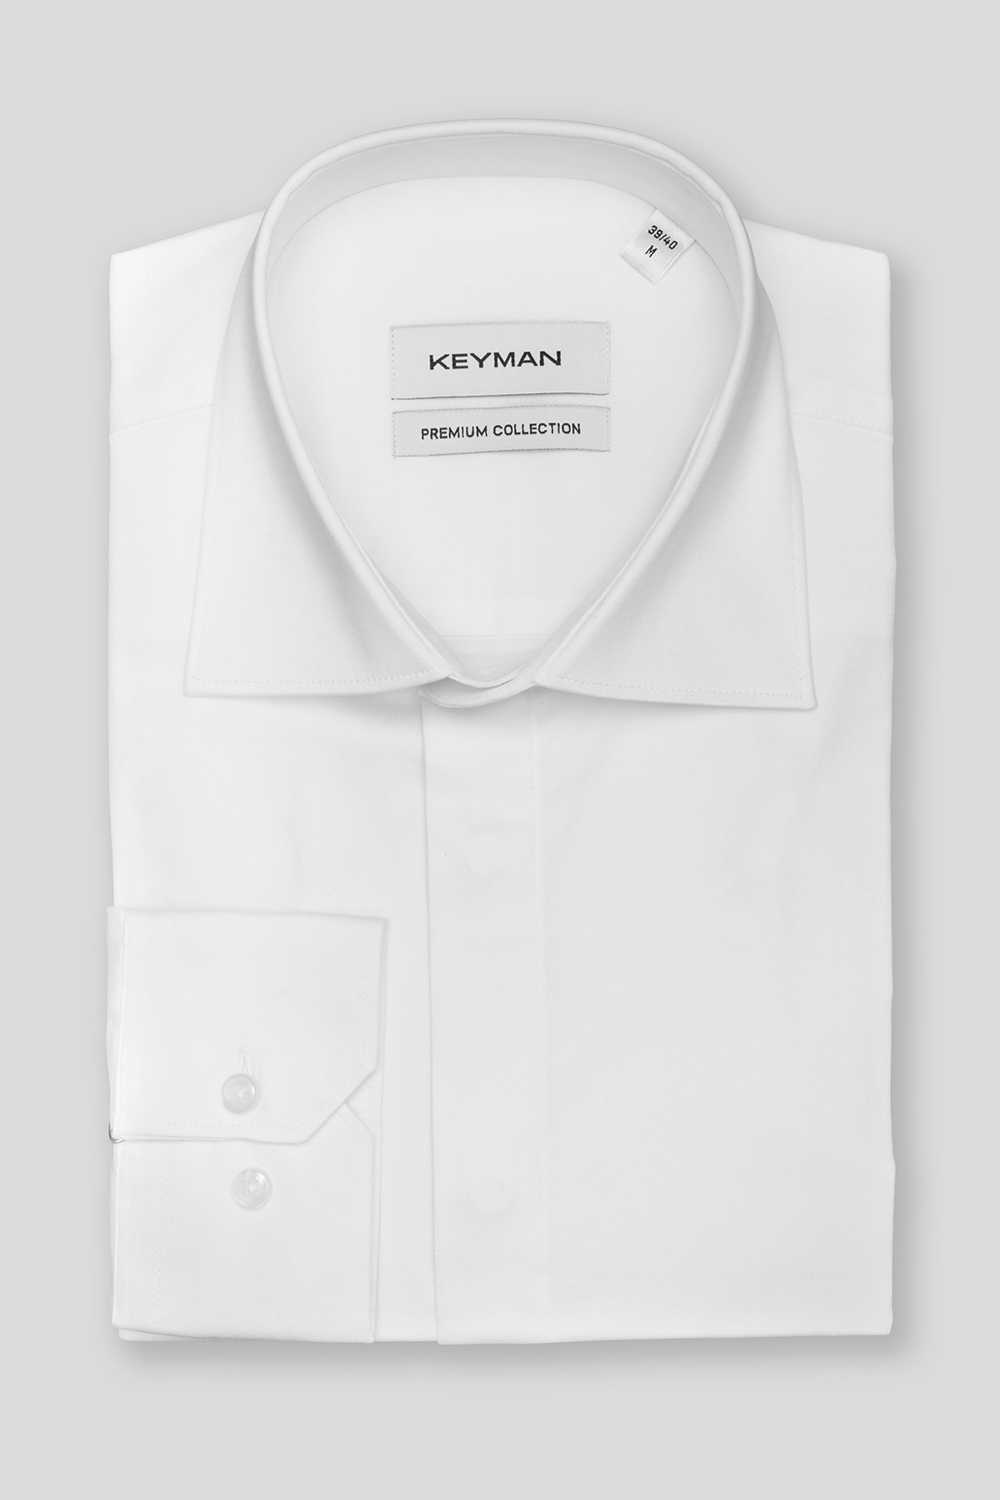 Рубашка мужская белая сатин закрытая планка